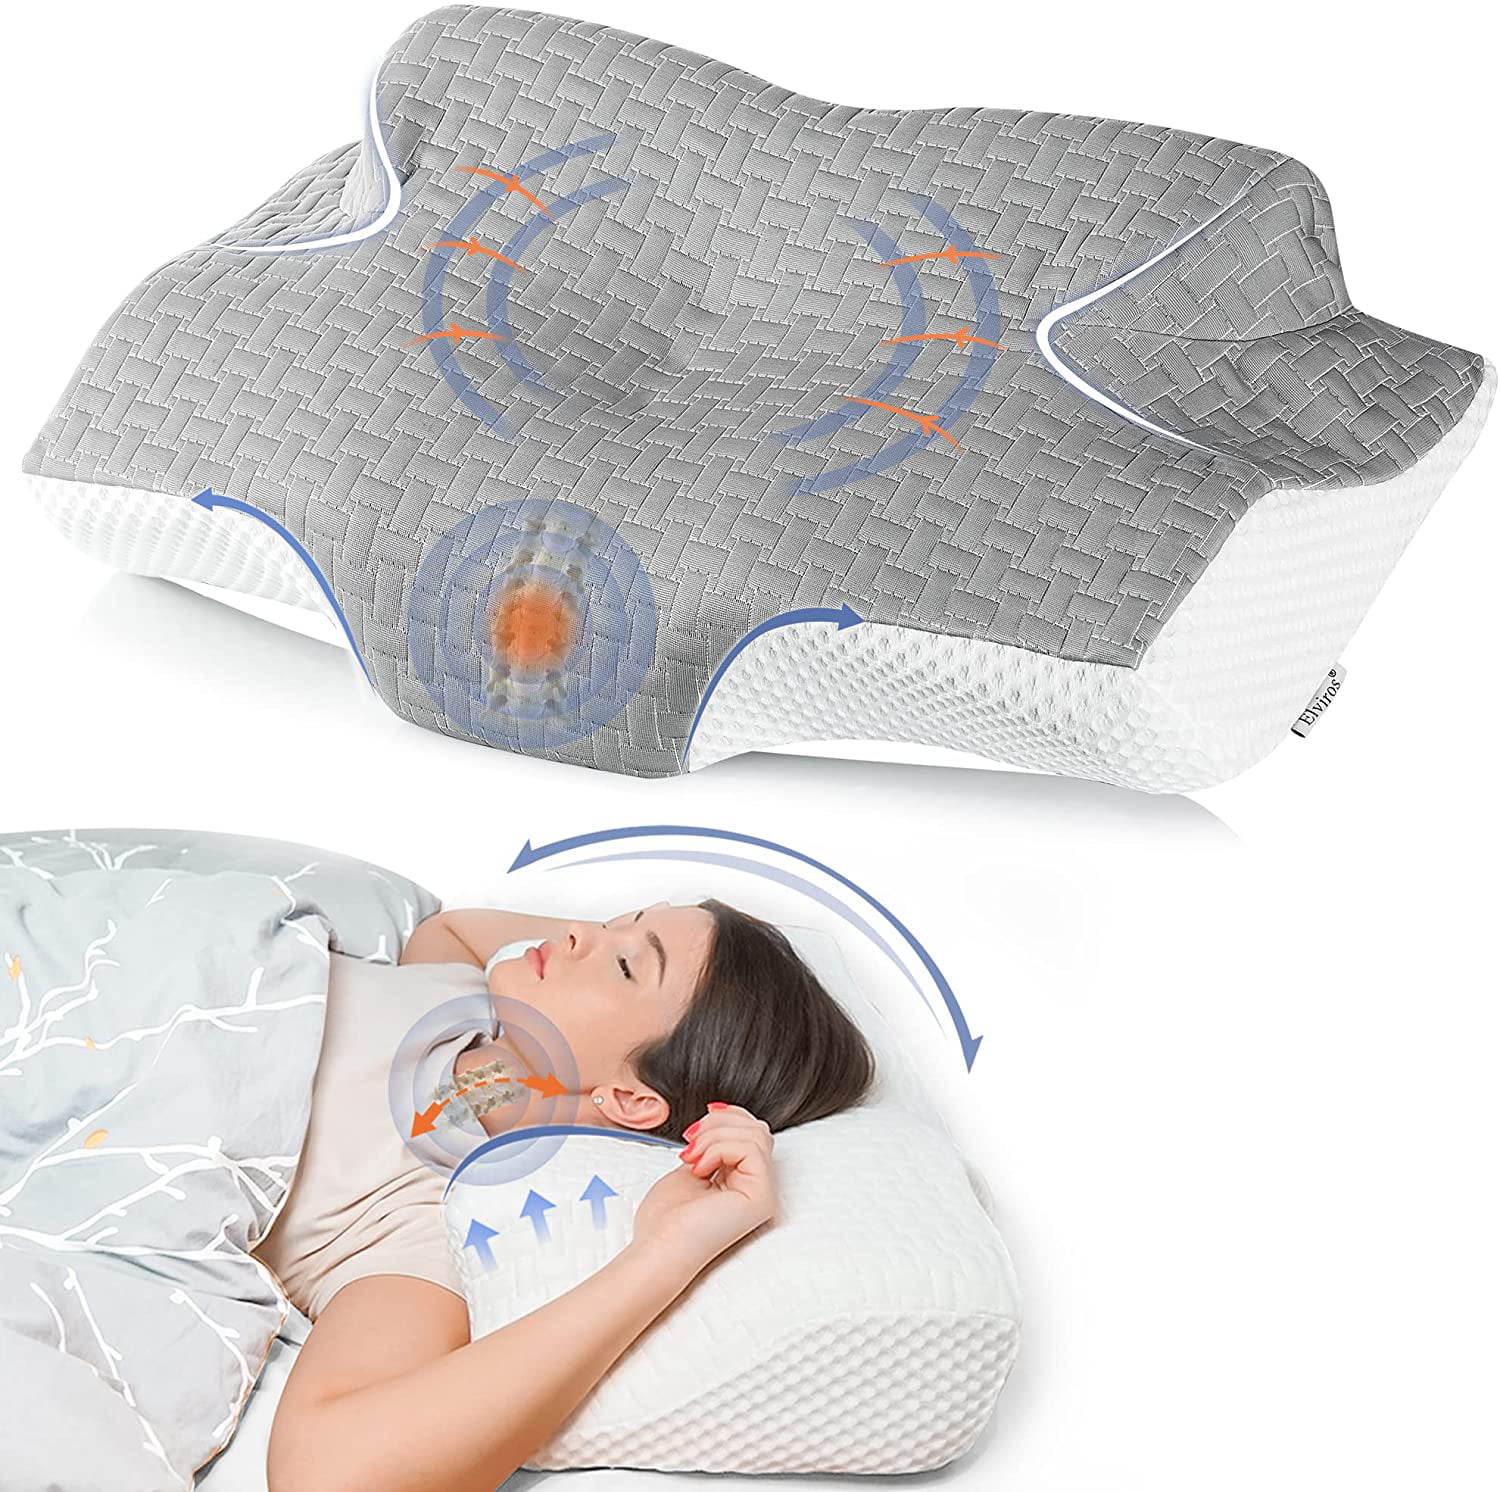 Contour Memory Foam Pillow Ergonomic Cervical Pillow for Neck Pain Sleeping